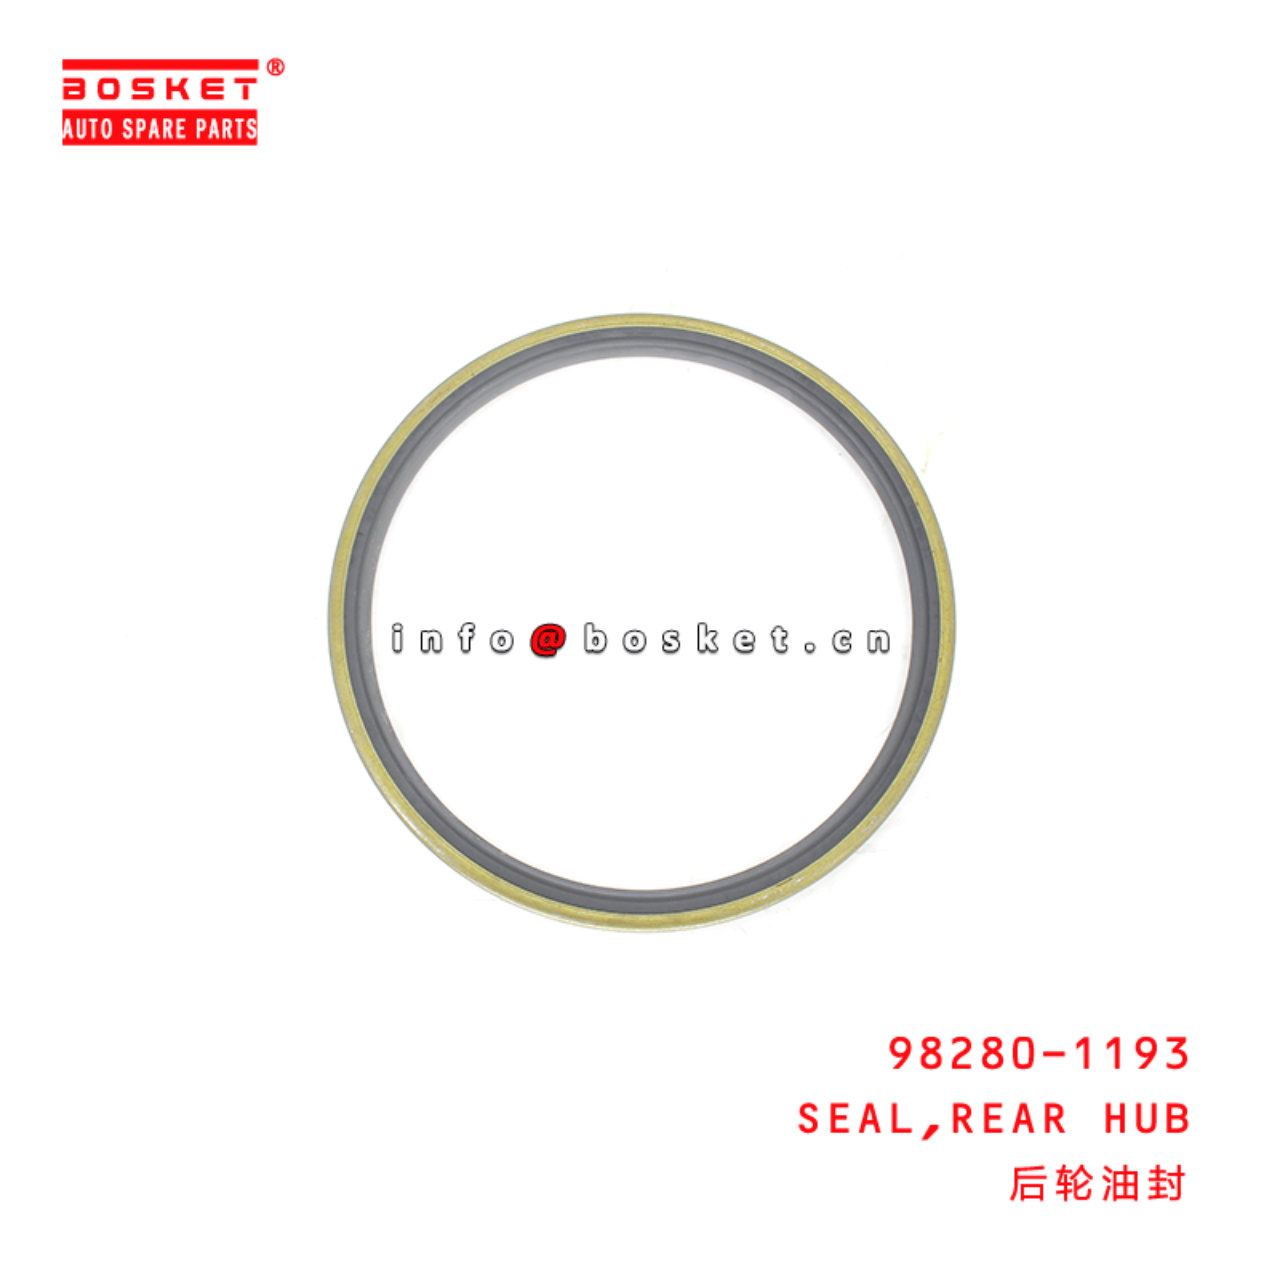 98280-1193 Rear Hub Seal Suitable for ISUZU HINO